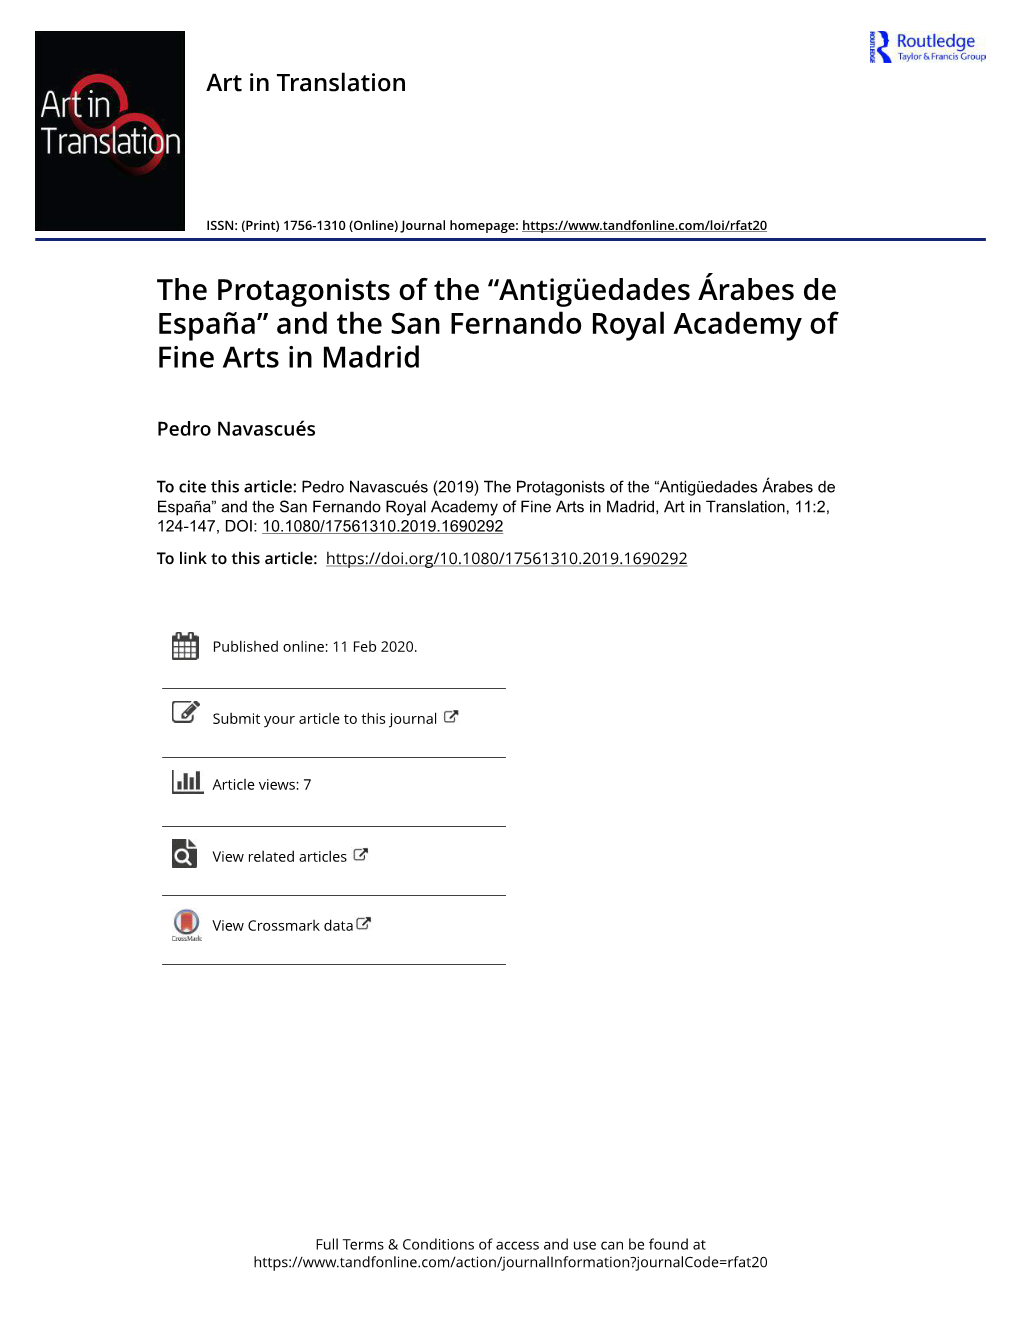 The Protagonists of the “Antigüedades Árabes De España” and the San Fernando Royal Academy of Fine Arts in Madrid